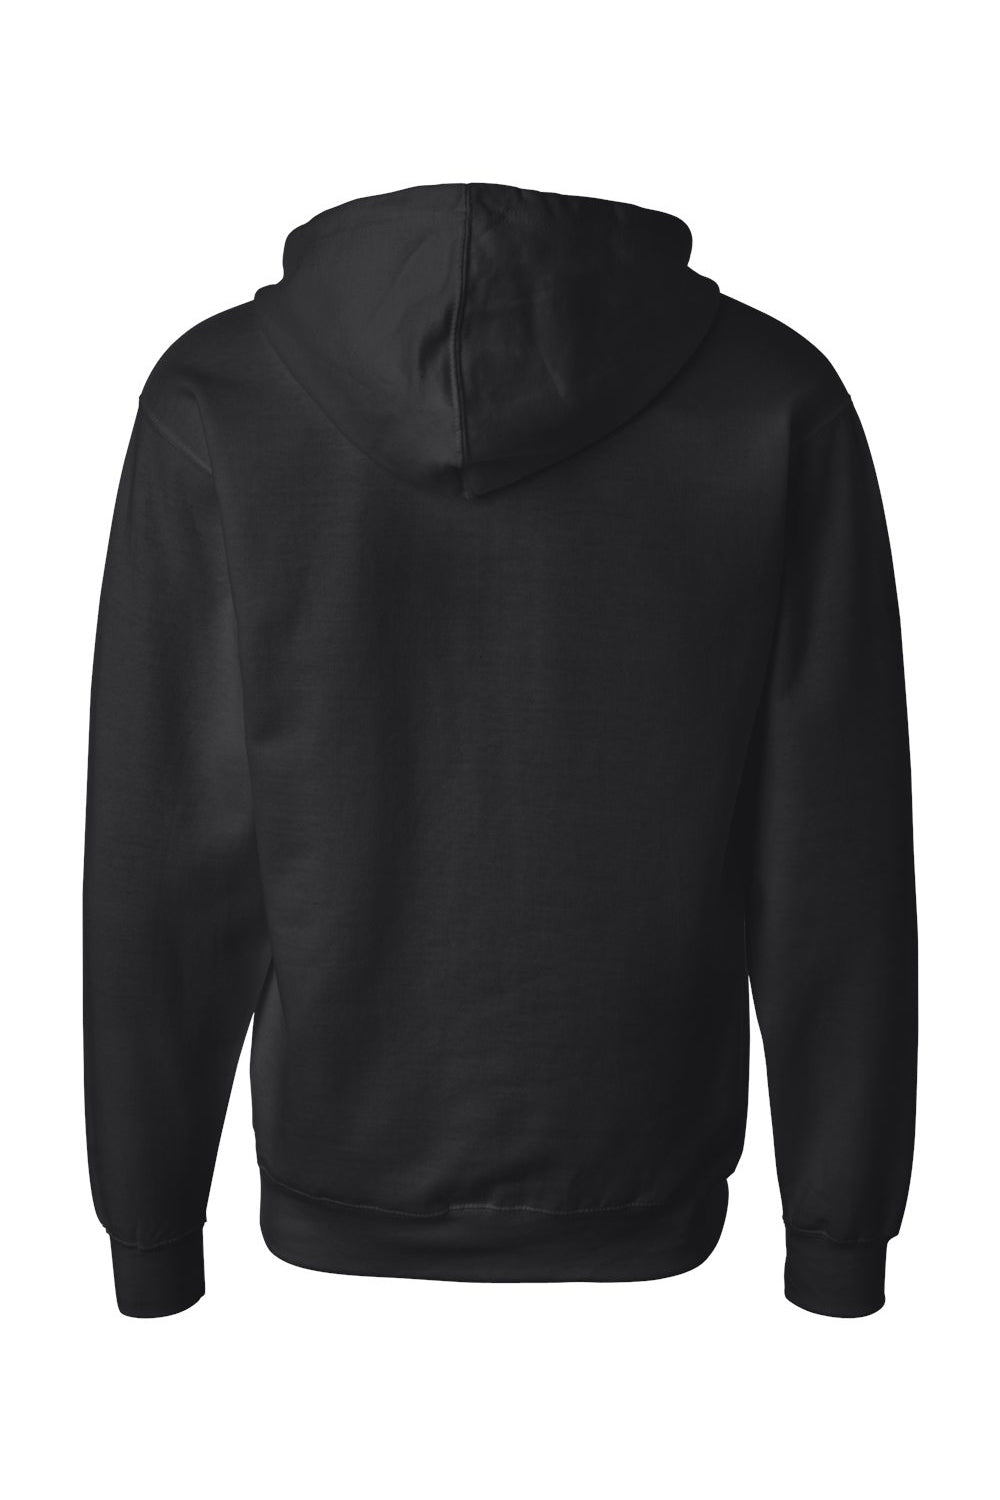 Independent Trading Co. SS4500Z Mens Full Zip Hooded Sweatshirt Hoodie Black Flat Back